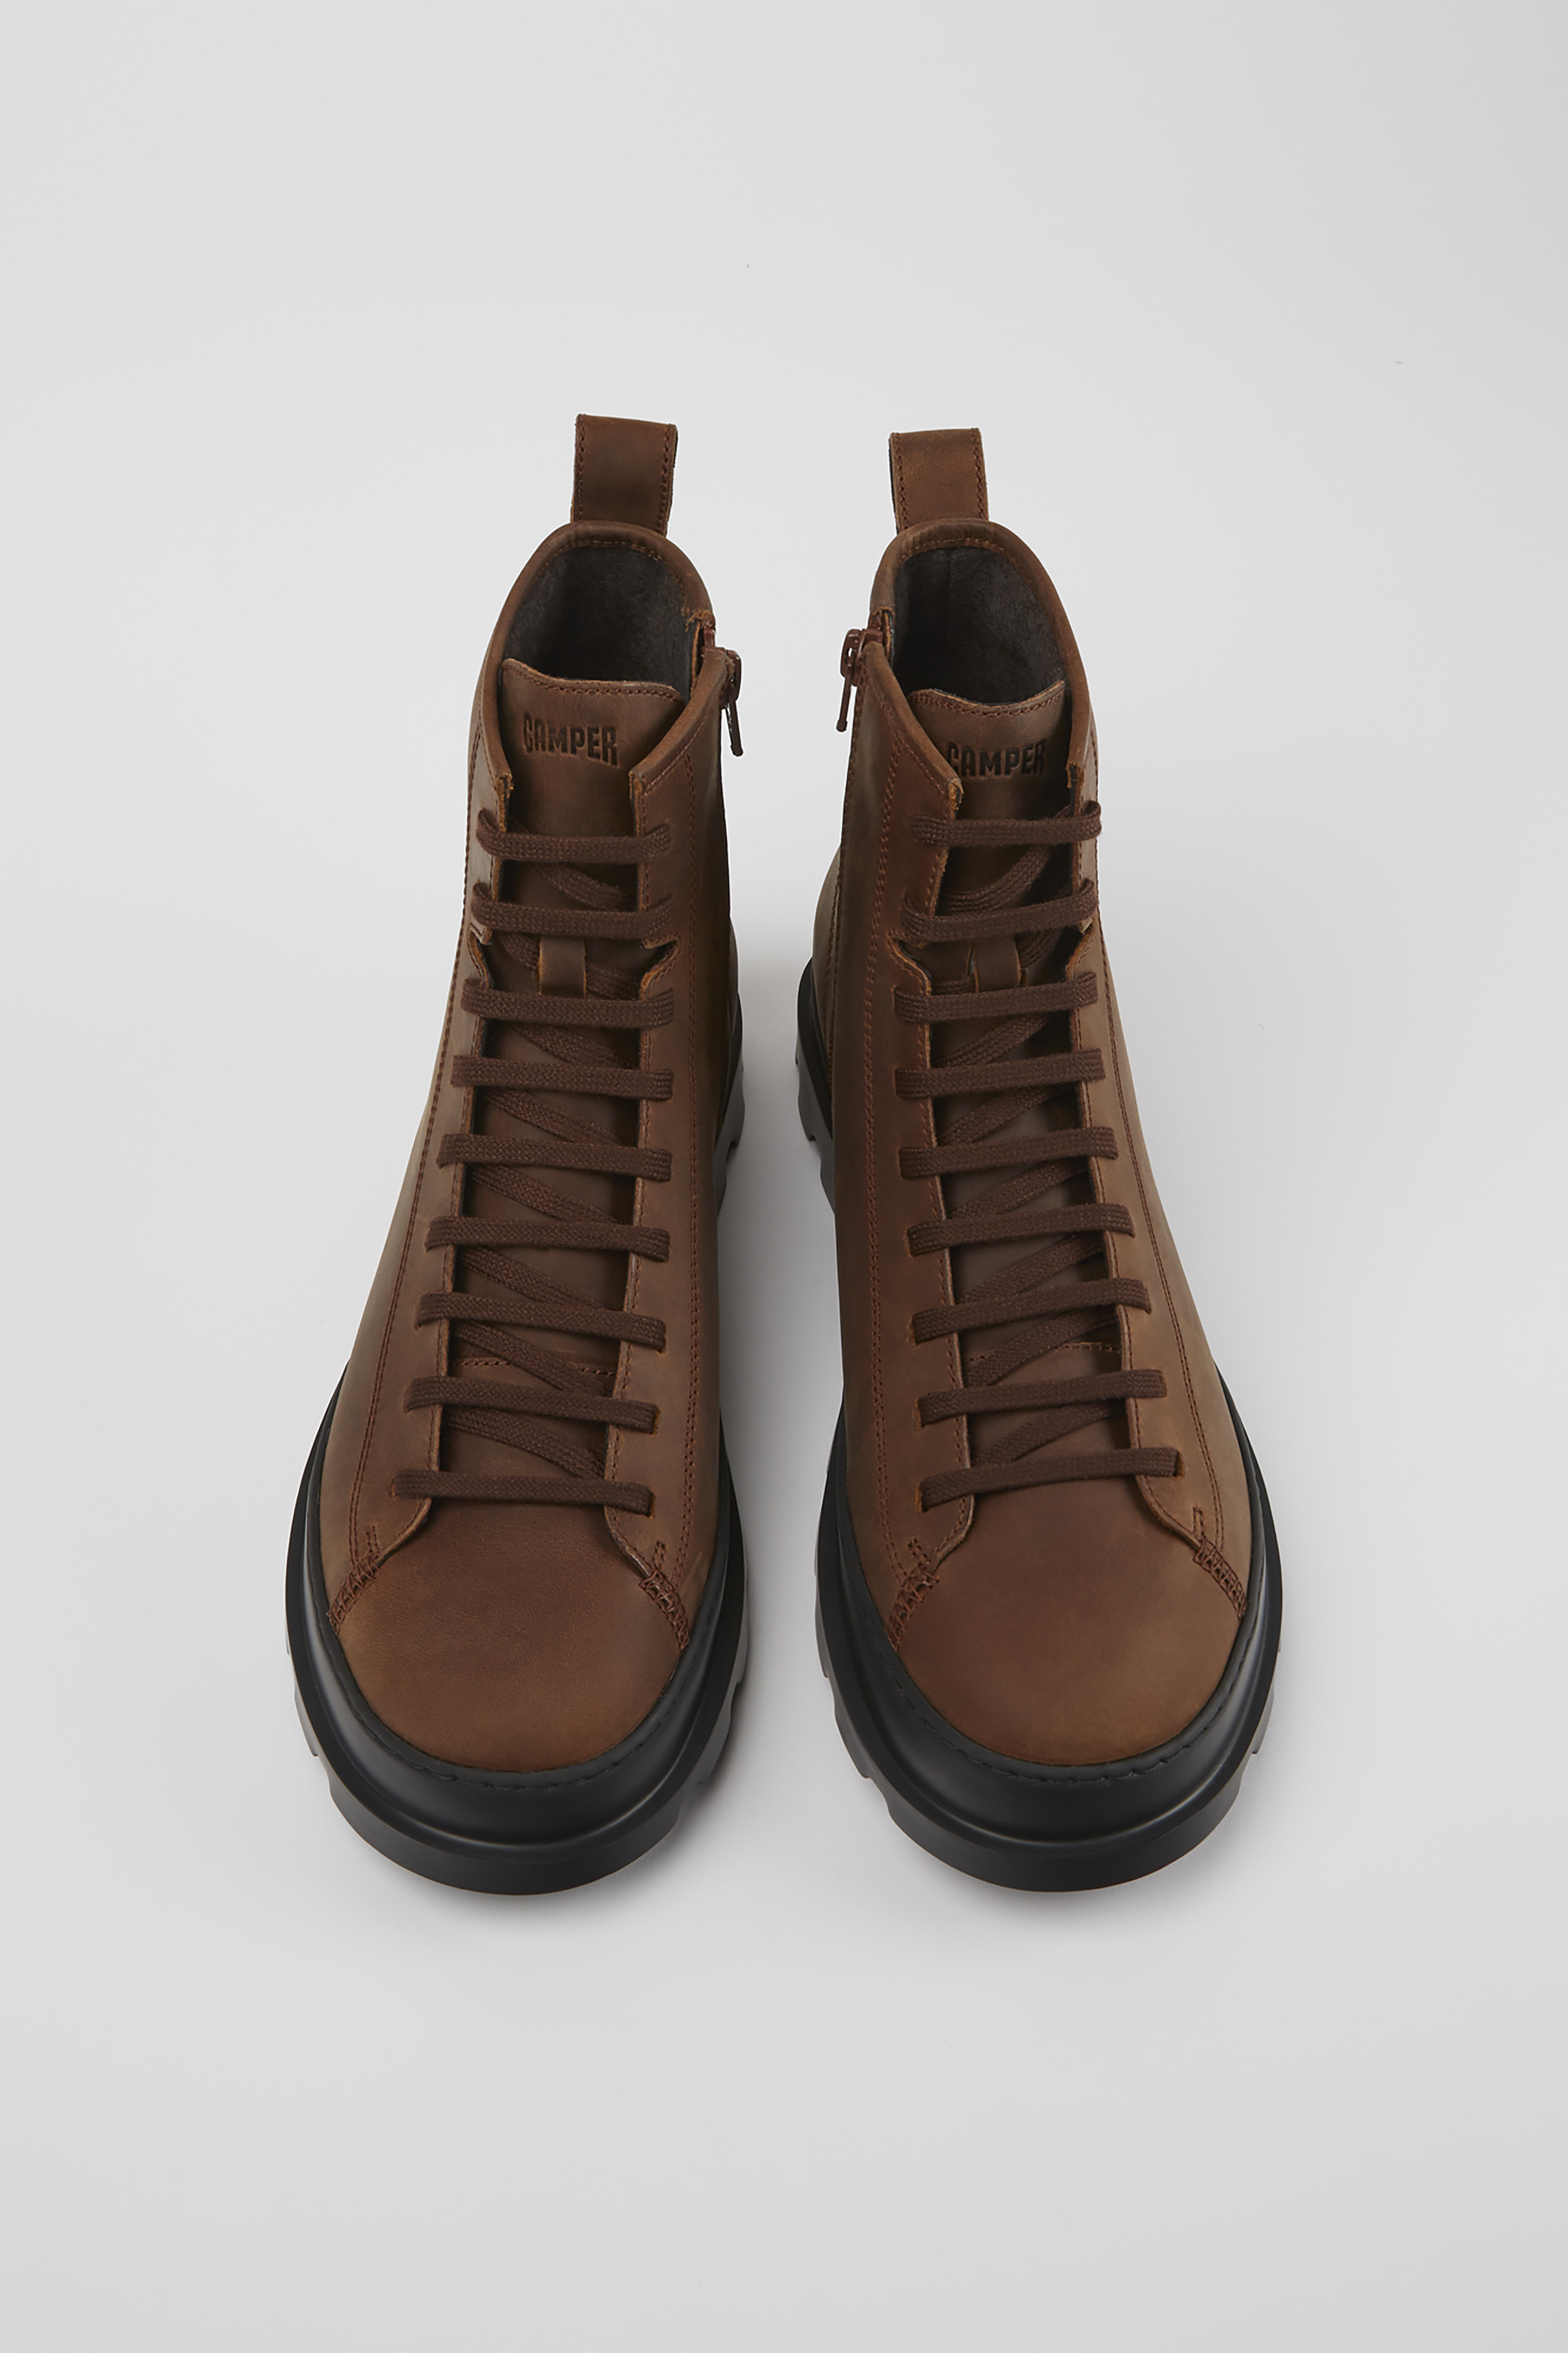 Niet essentieel Correctie eindeloos BRUTUS Brown Ankle Boots for Men - Spring/Summer collection - Camper  Slovakia